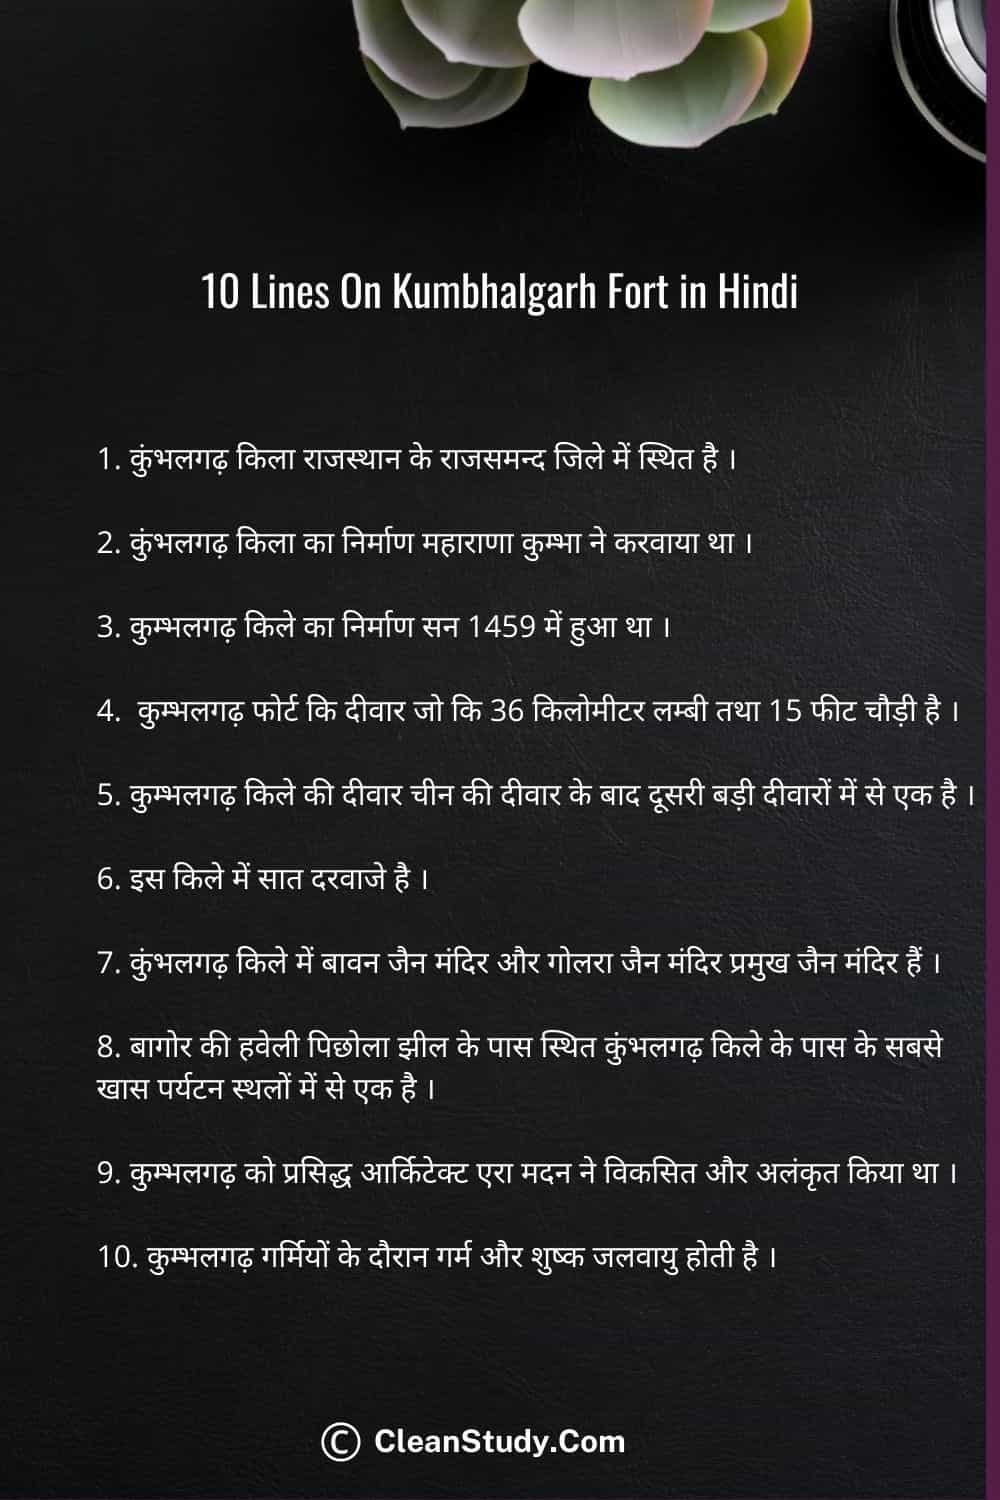 10 Lines on Kumbhalgarh Fort in Hindi